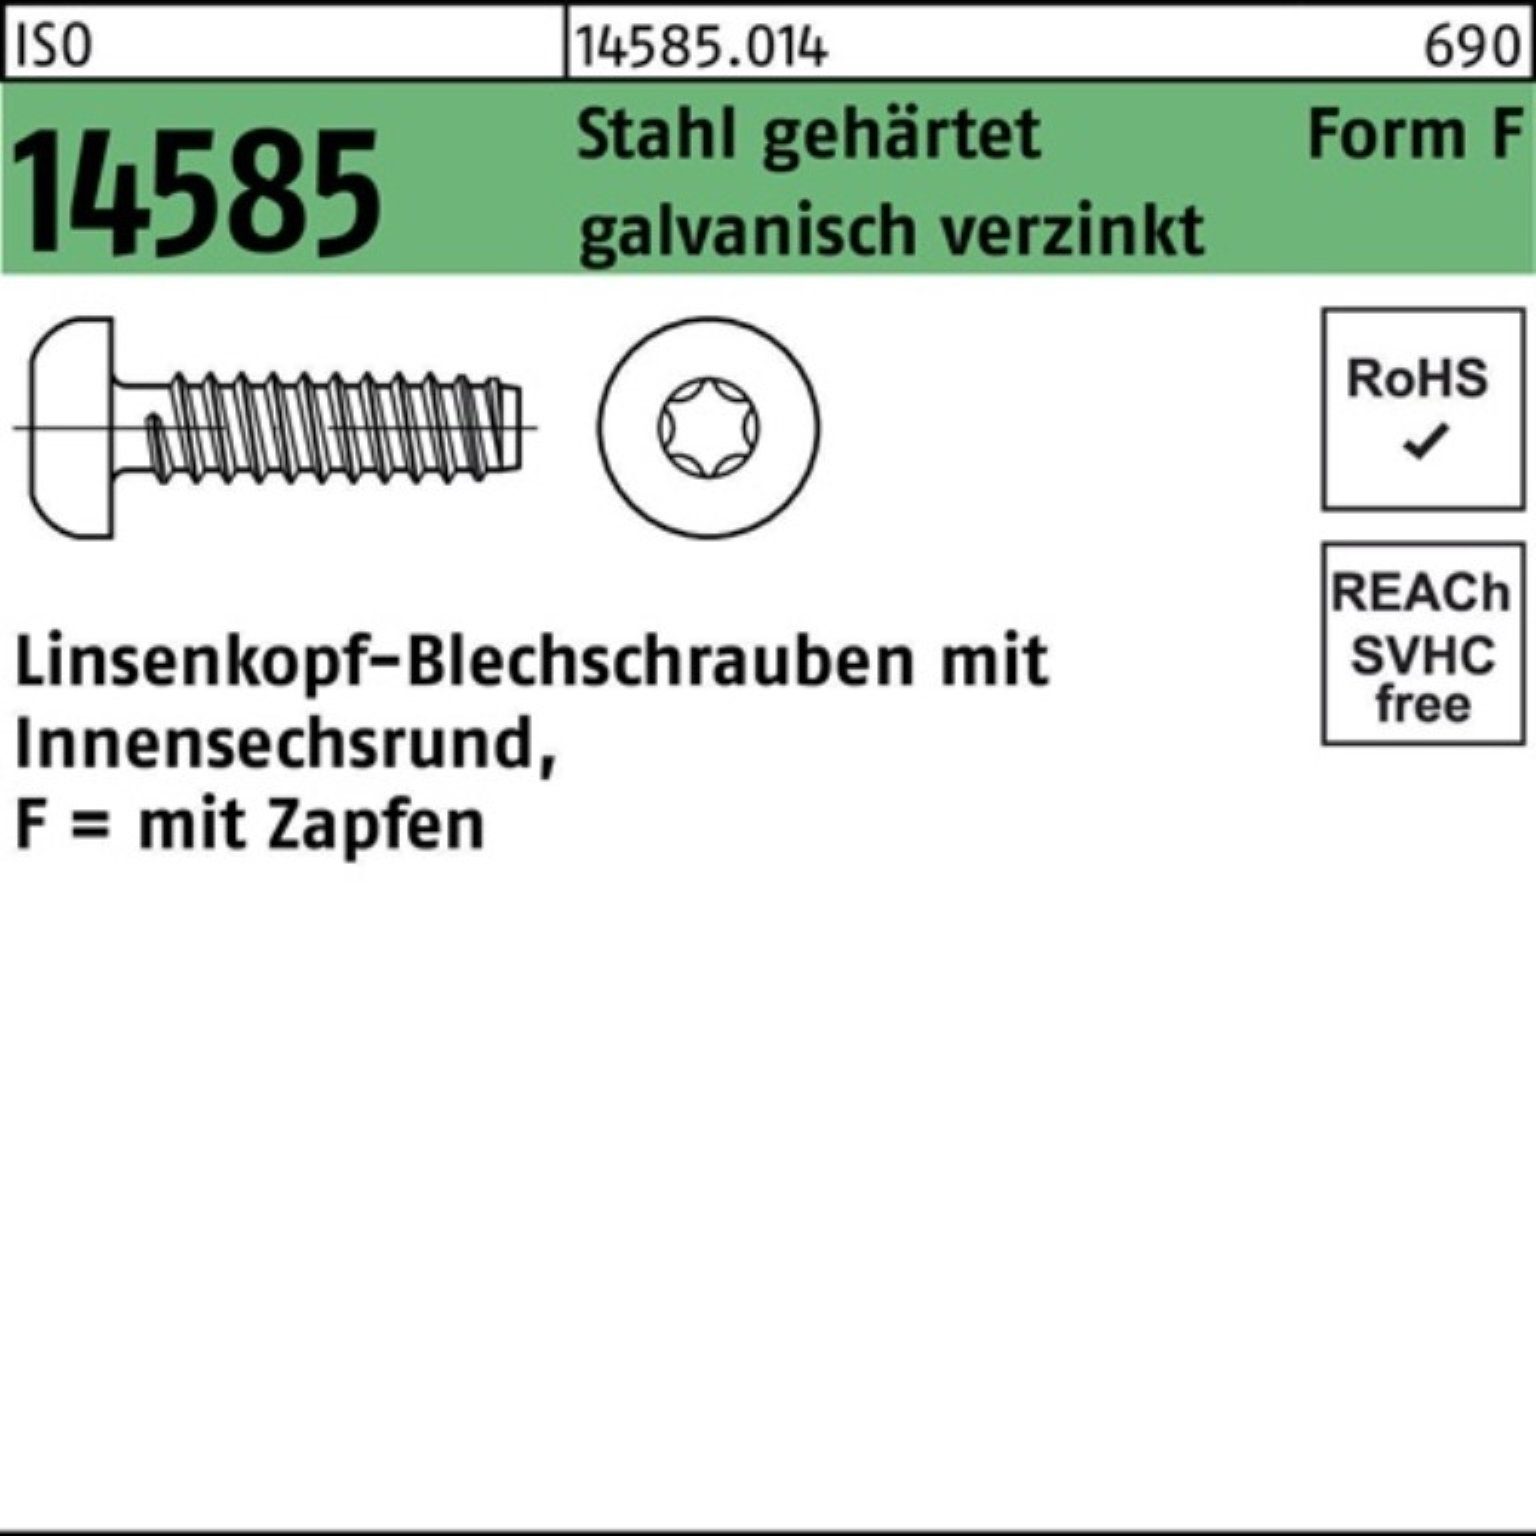 ISO Blechschraube Pack Linsenblechschraube -F Reyher ISR/Spitze 1000er g Stahl 2,9x19 14585